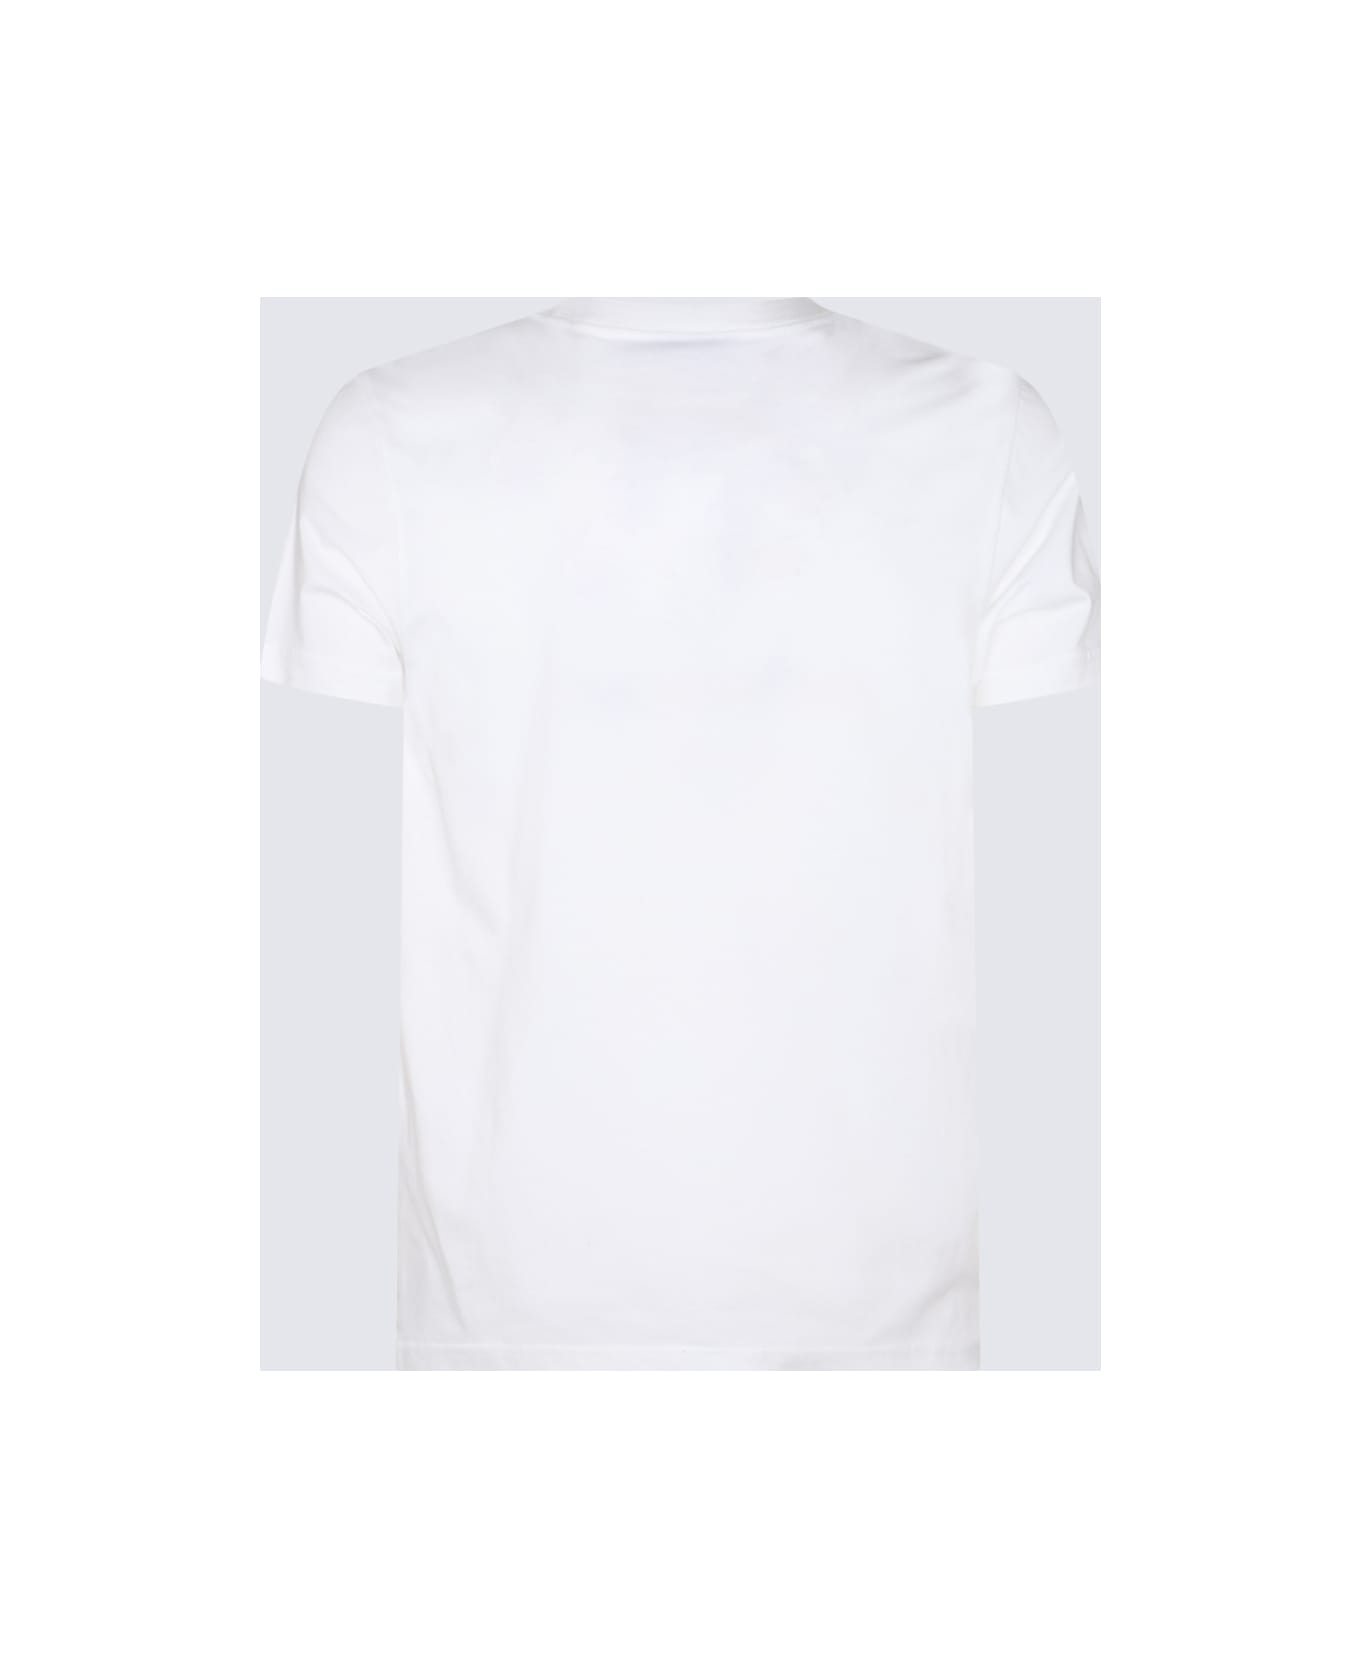 Paul Smith White Cotton T-shirt - White シャツ